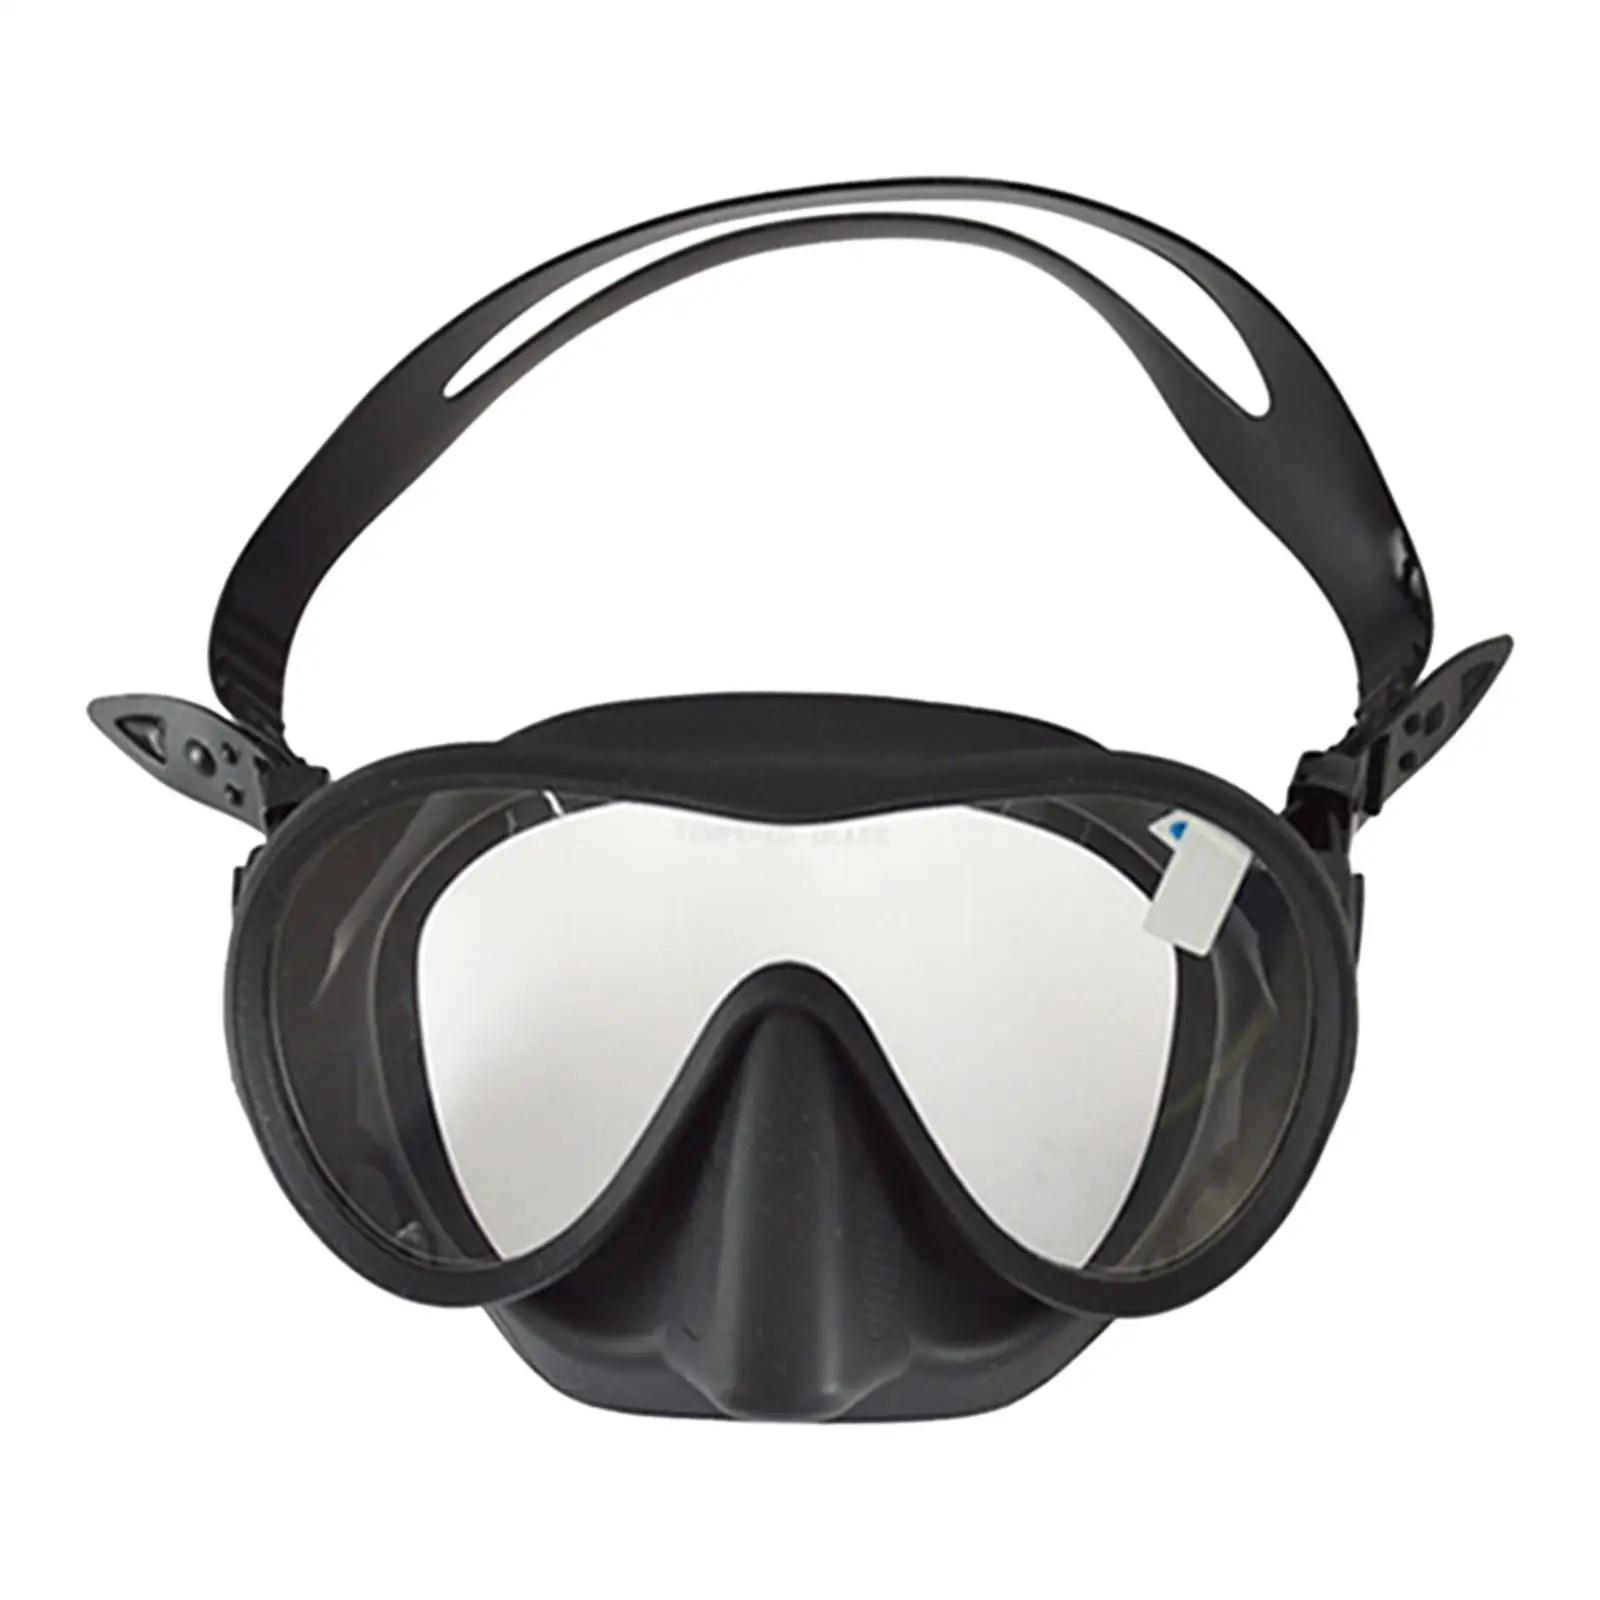 Swim Snorkel Goggles Anti Fog Accesscories Glass Lens Adjustable Headband for Youth Outdoor